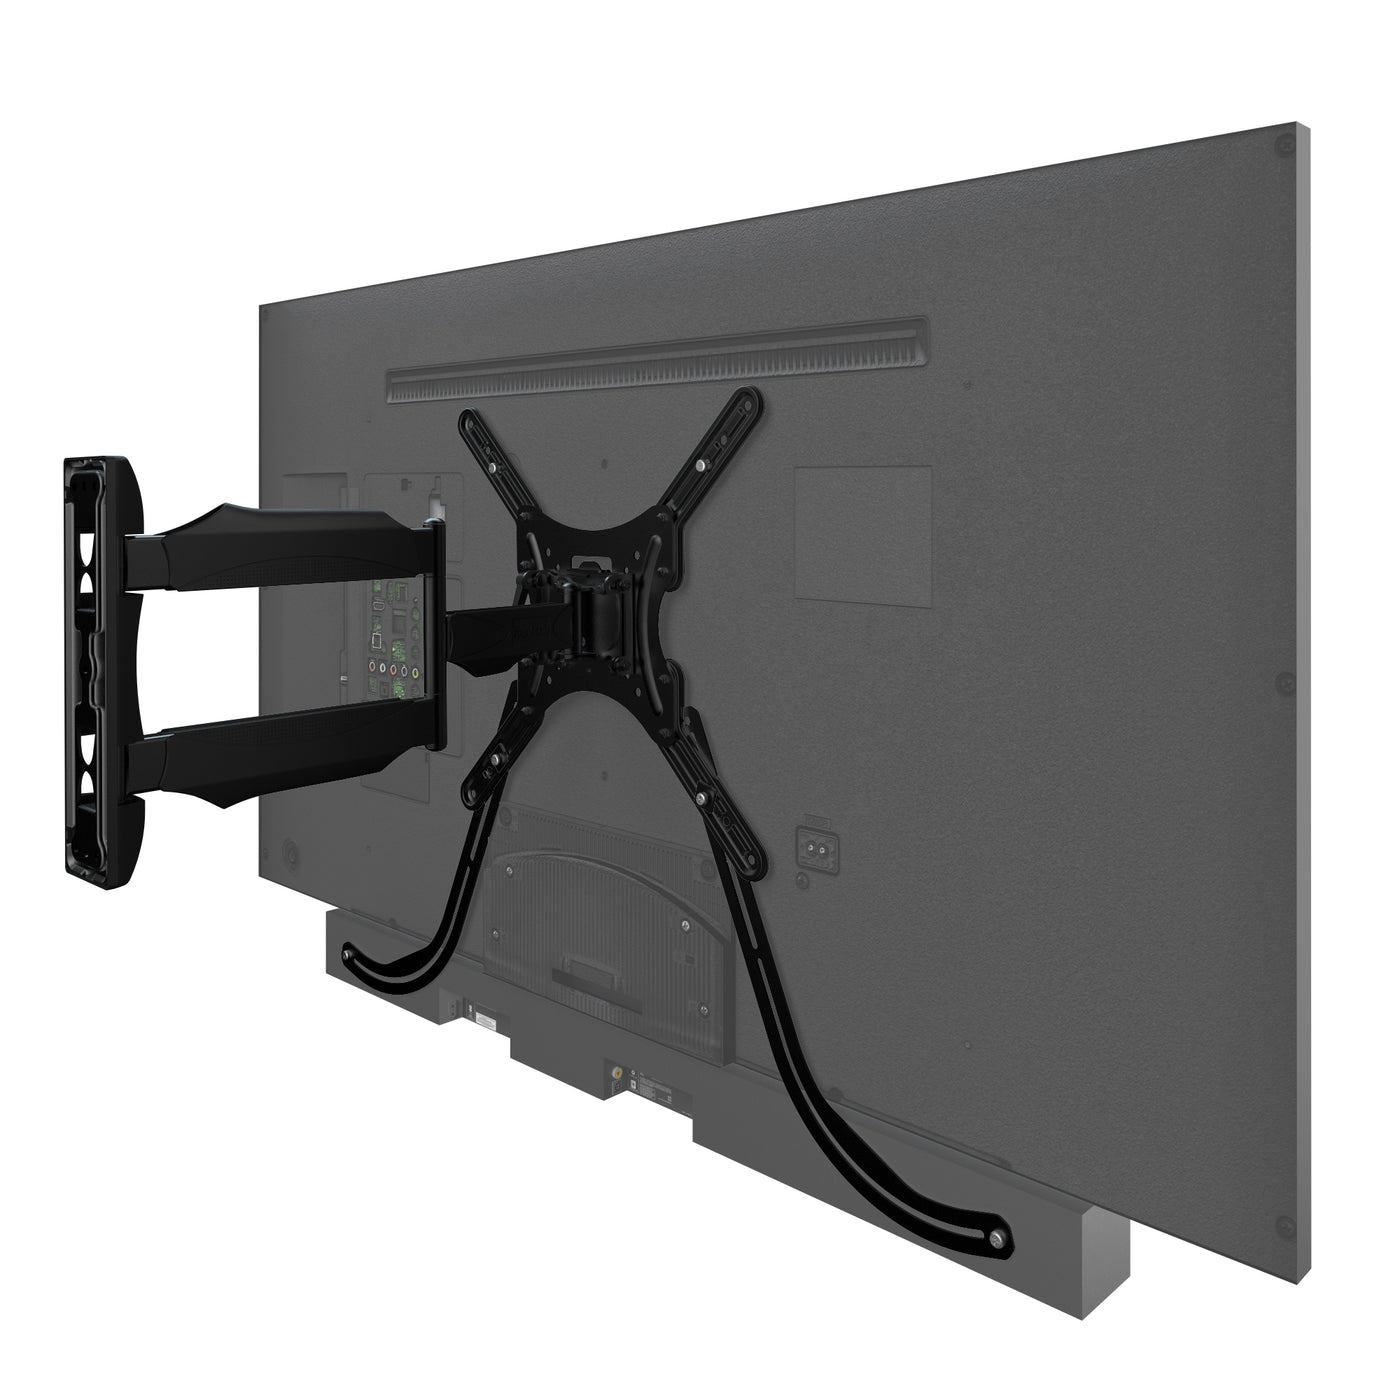 Universal Sound Bar Mount, Compatible With VESA Compliant TVs and Mounts - SB100